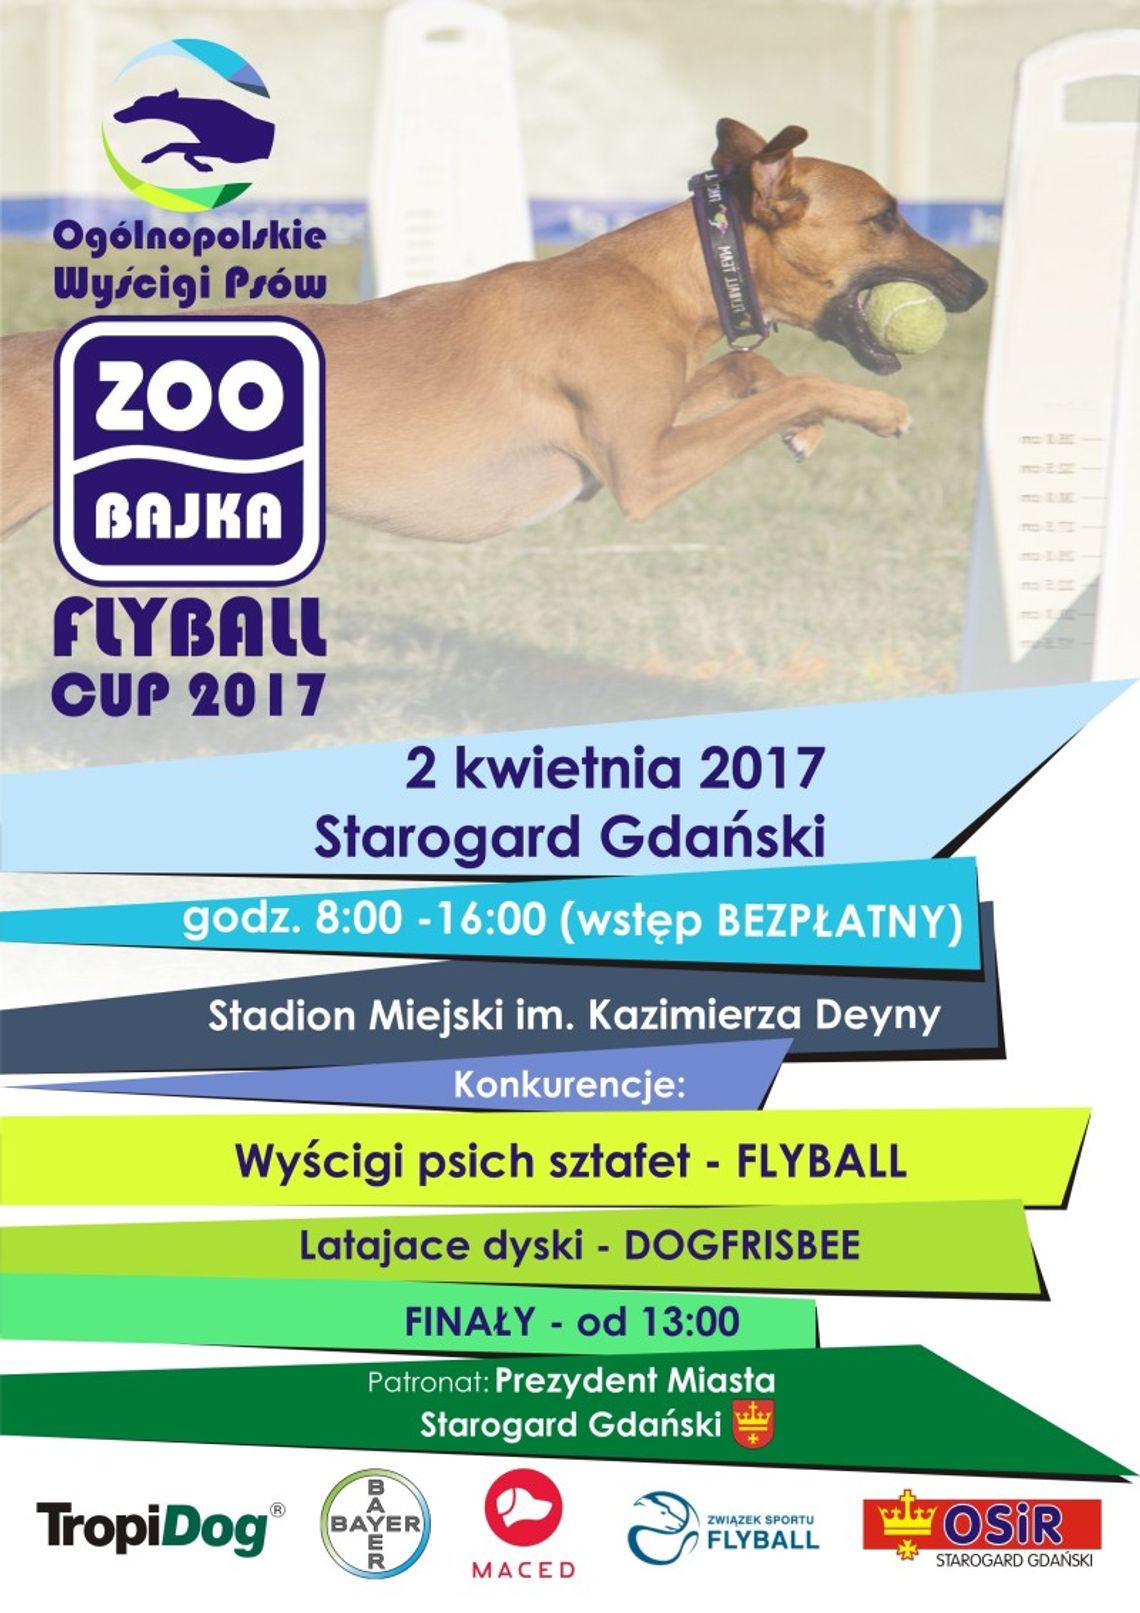 Musisz to zobaczyć! Zoobajka Flyball Cup 2017 